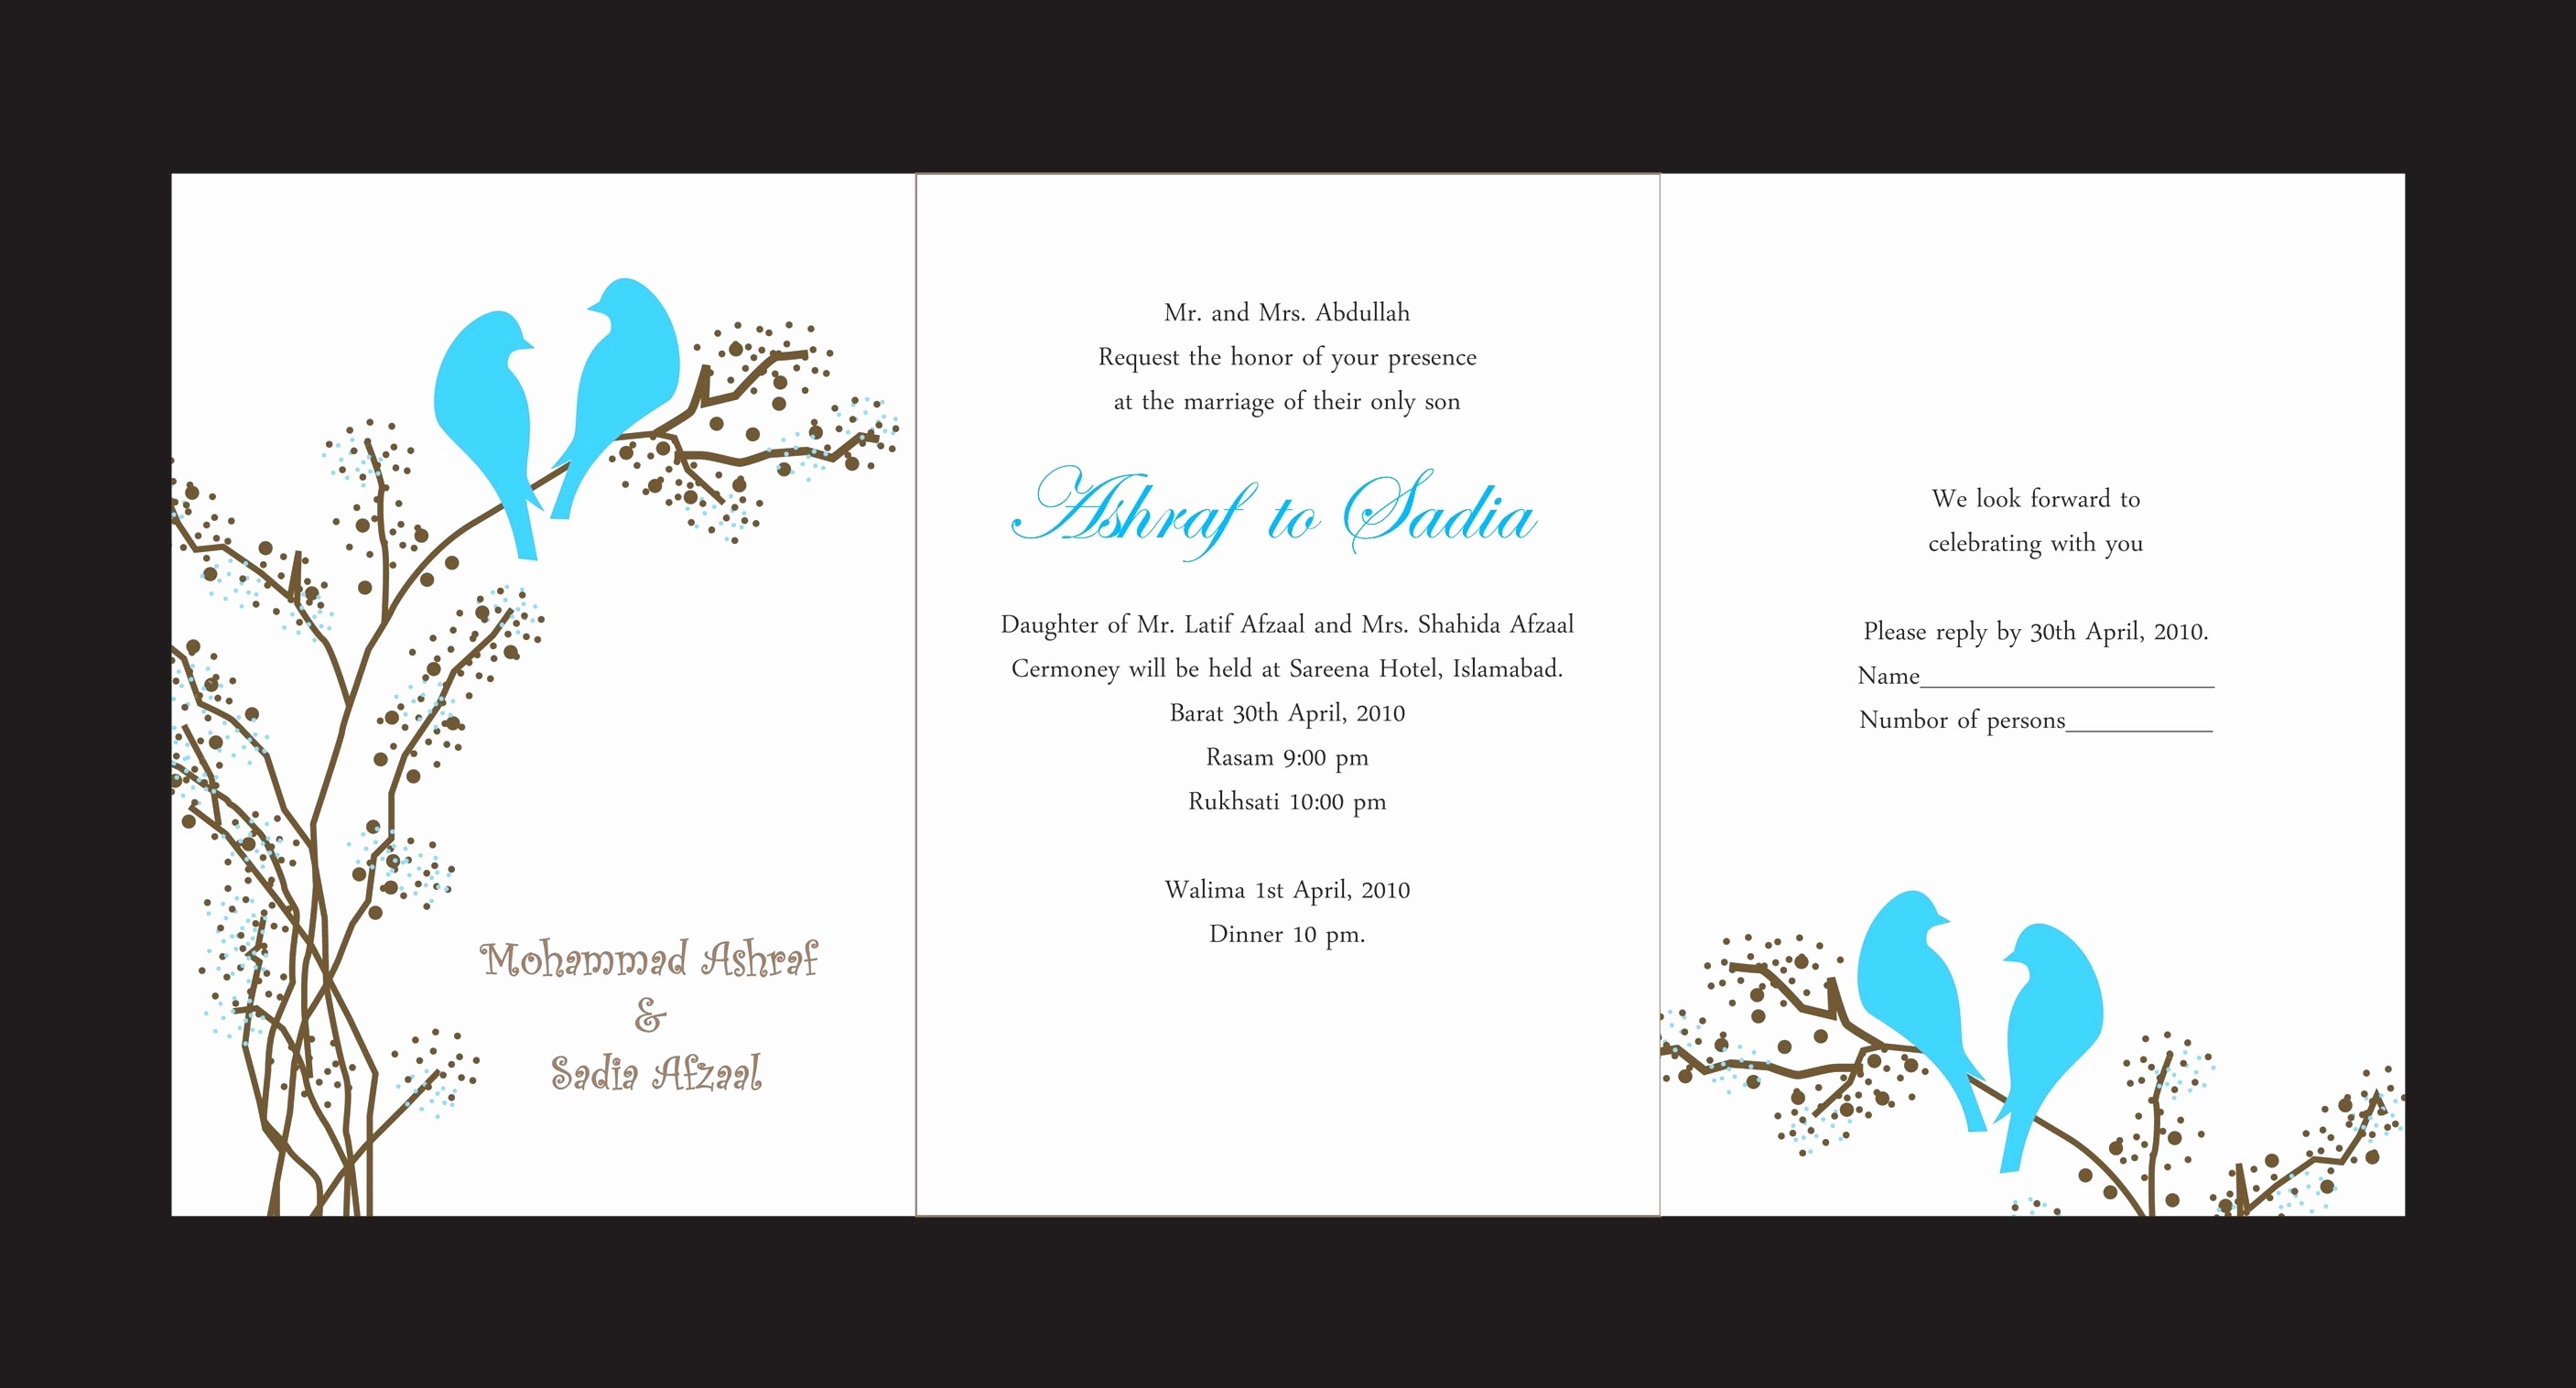 DOCUMENTS IDEAS Www Boulimie Us Document Online Indian Wedding Invitation Lakeside Insurance Clinton Twp